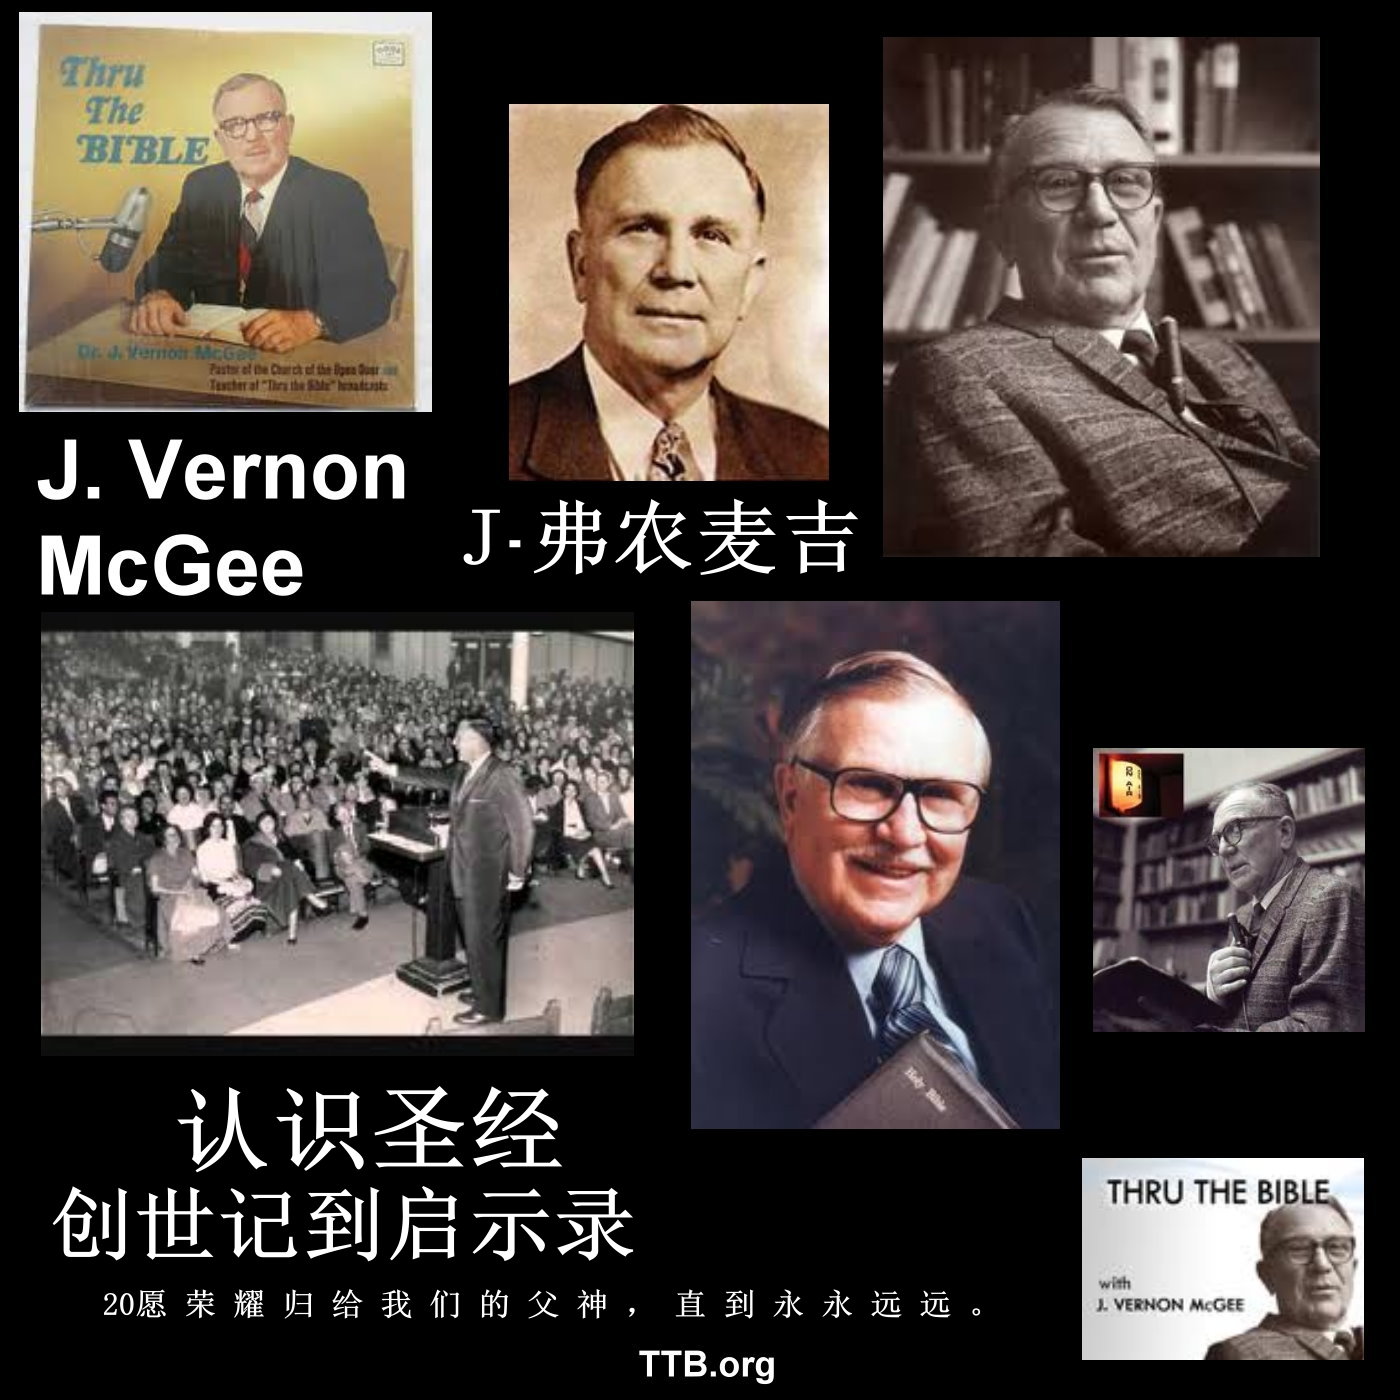 J 弗农麦基 - 认识圣经 - 新约圣经第1部分 - J Vernon McGee - Chinese Mandarin